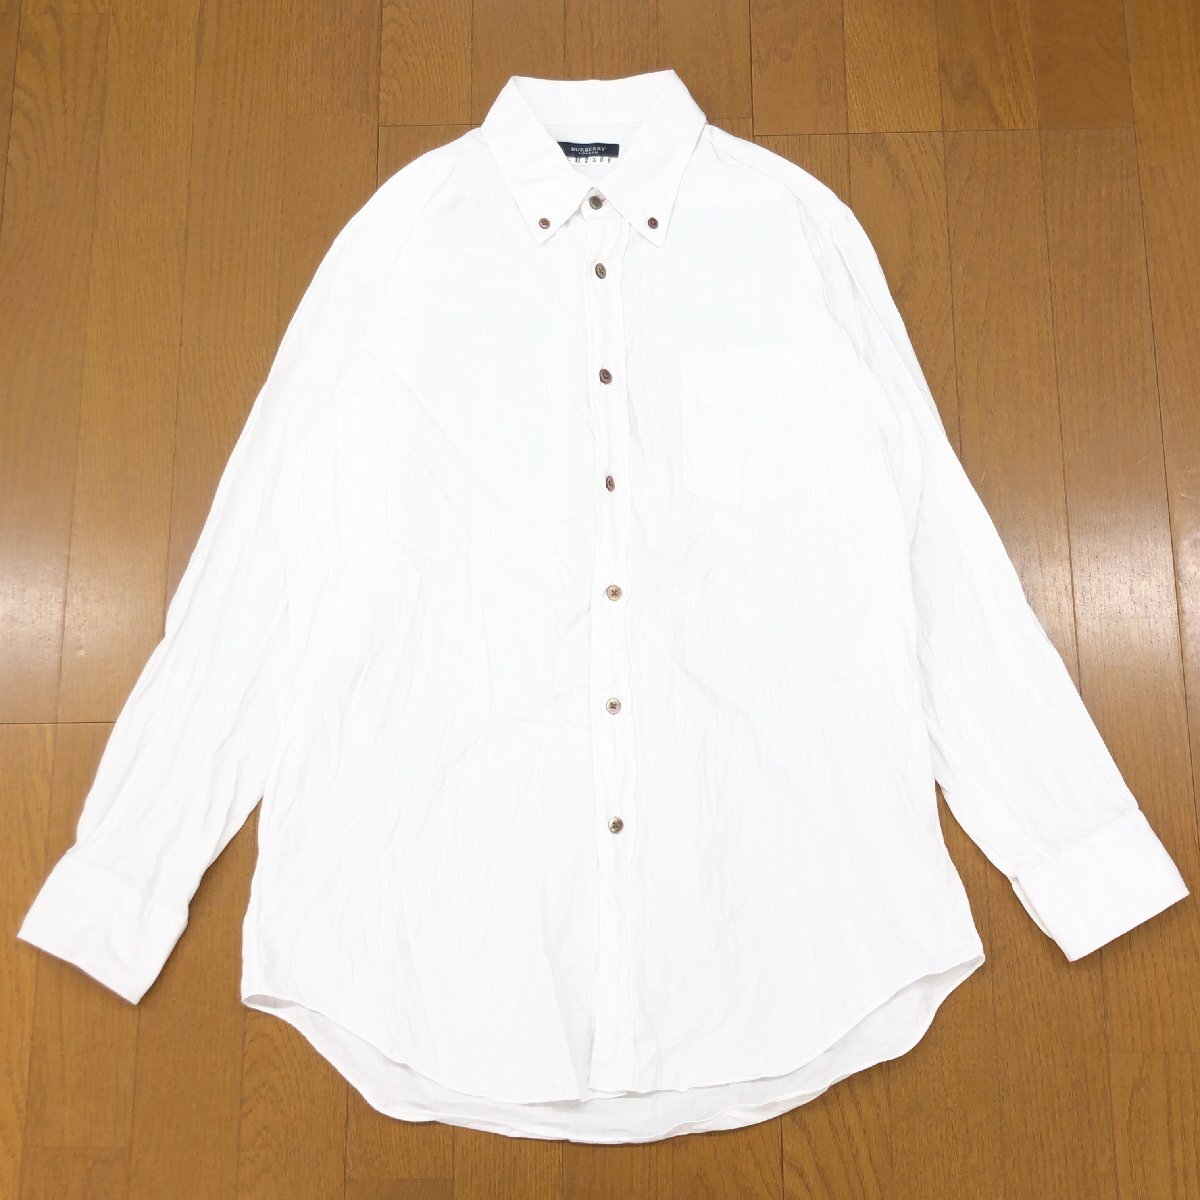 BURBERRY LONDON バーバリーロンドン ホース刺繍 B.D. ドレスシャツ M相当 白 ホワイト 長袖 ワイシャツ カッターシャツ 日本製 国内正規品の画像1